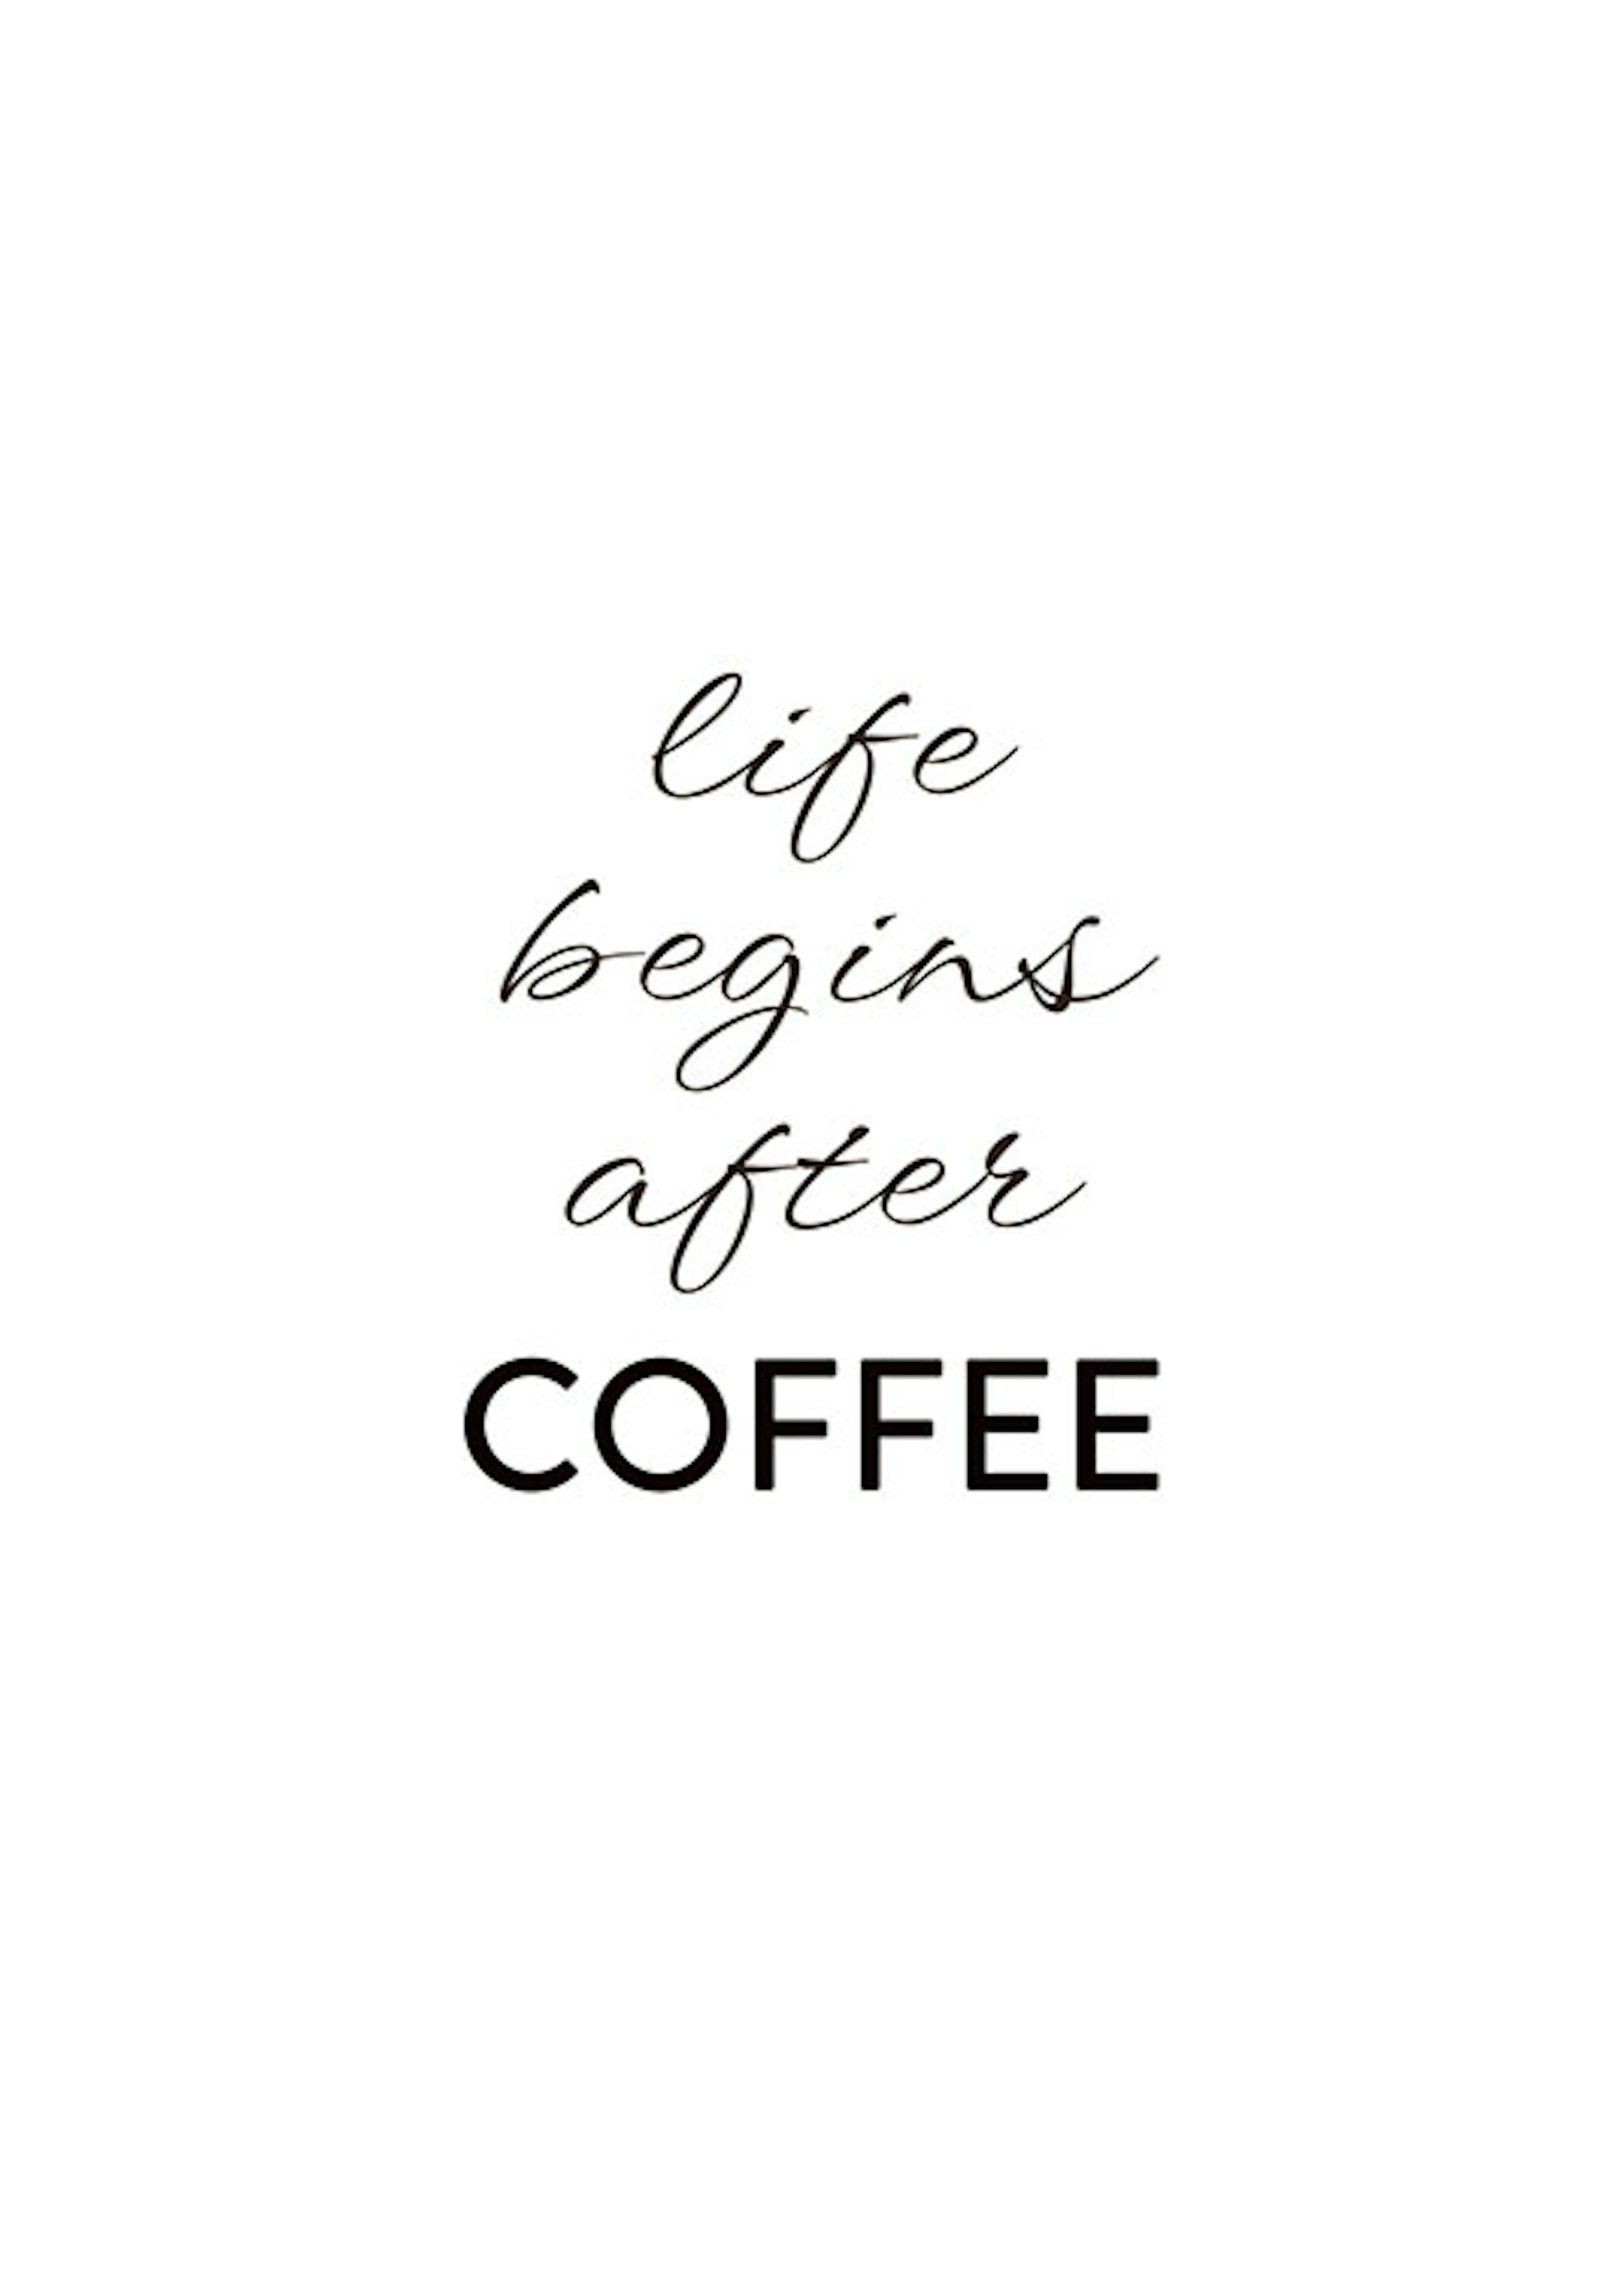 Plakat med teksten Life begins after coffee, sjove citater.